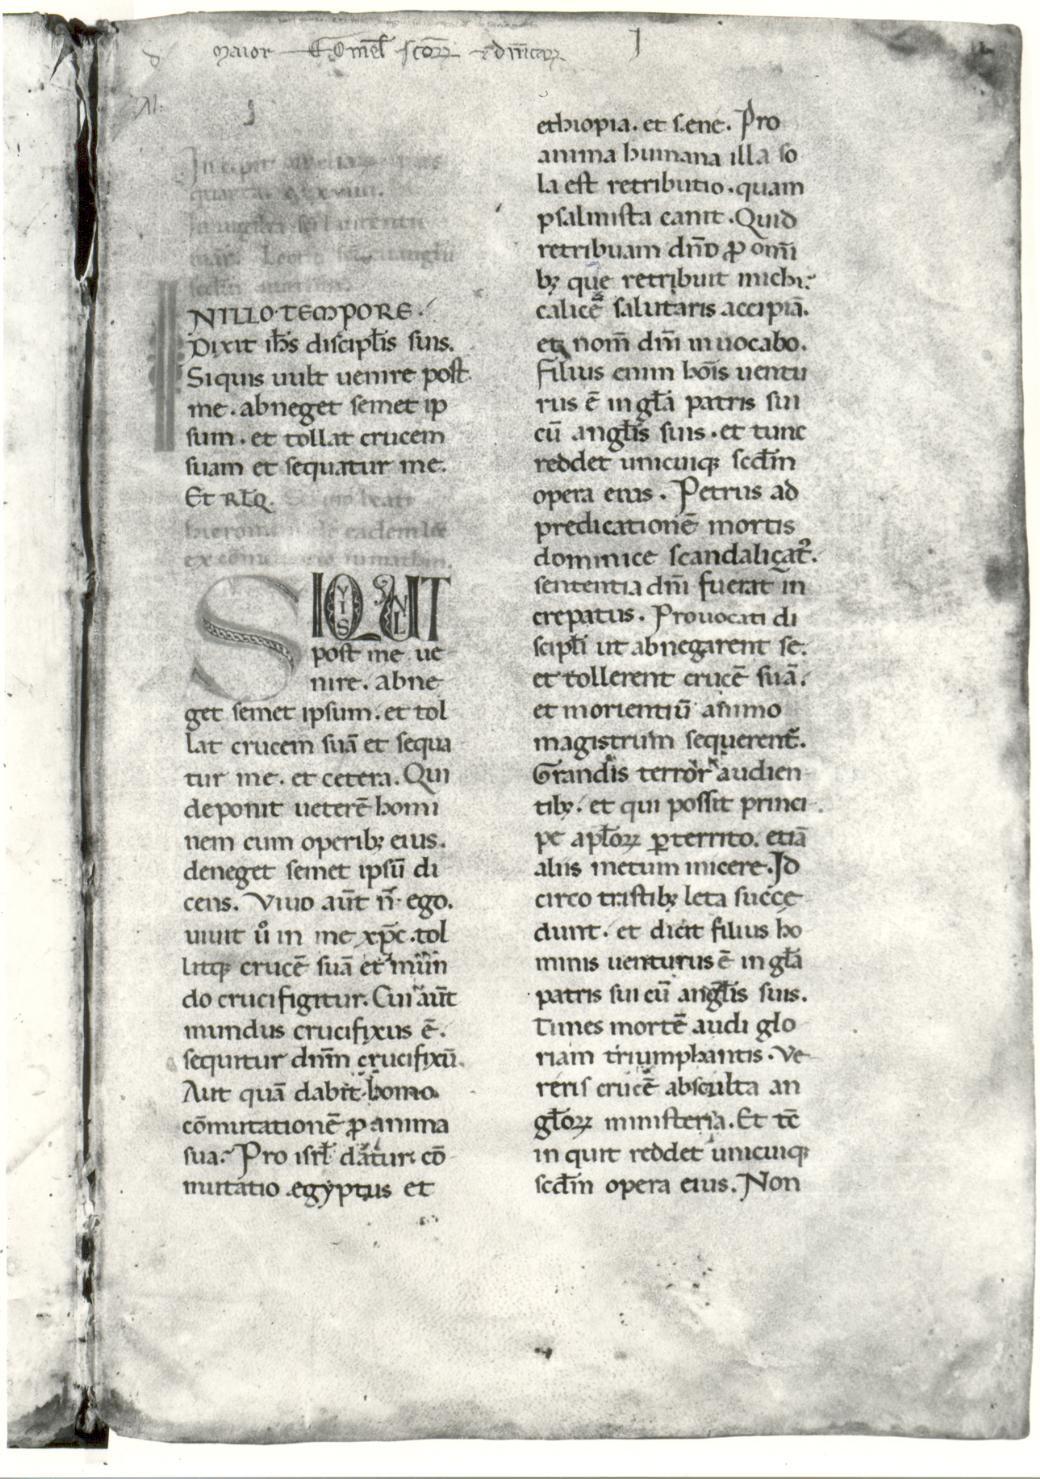 libretto - ambito friulano (sec. XIV)